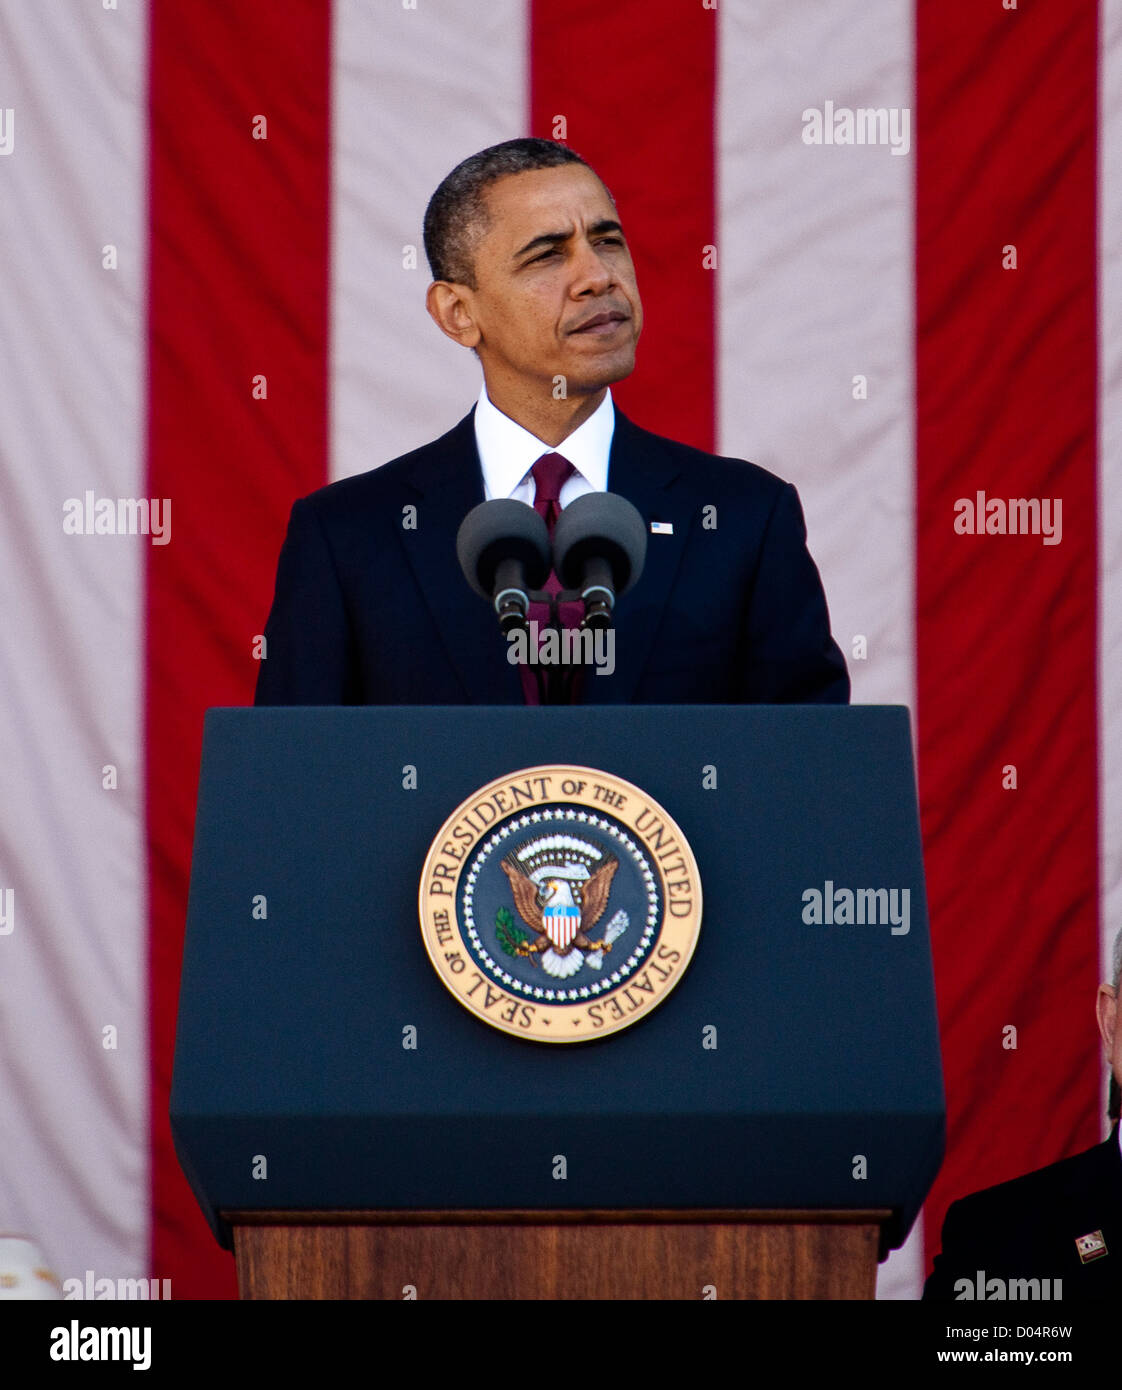 US President Barack Obama speaks during a Veterans Day ceremony Arlington National Cemetery November 11, 2012 in Arlington, VA. Stock Photo